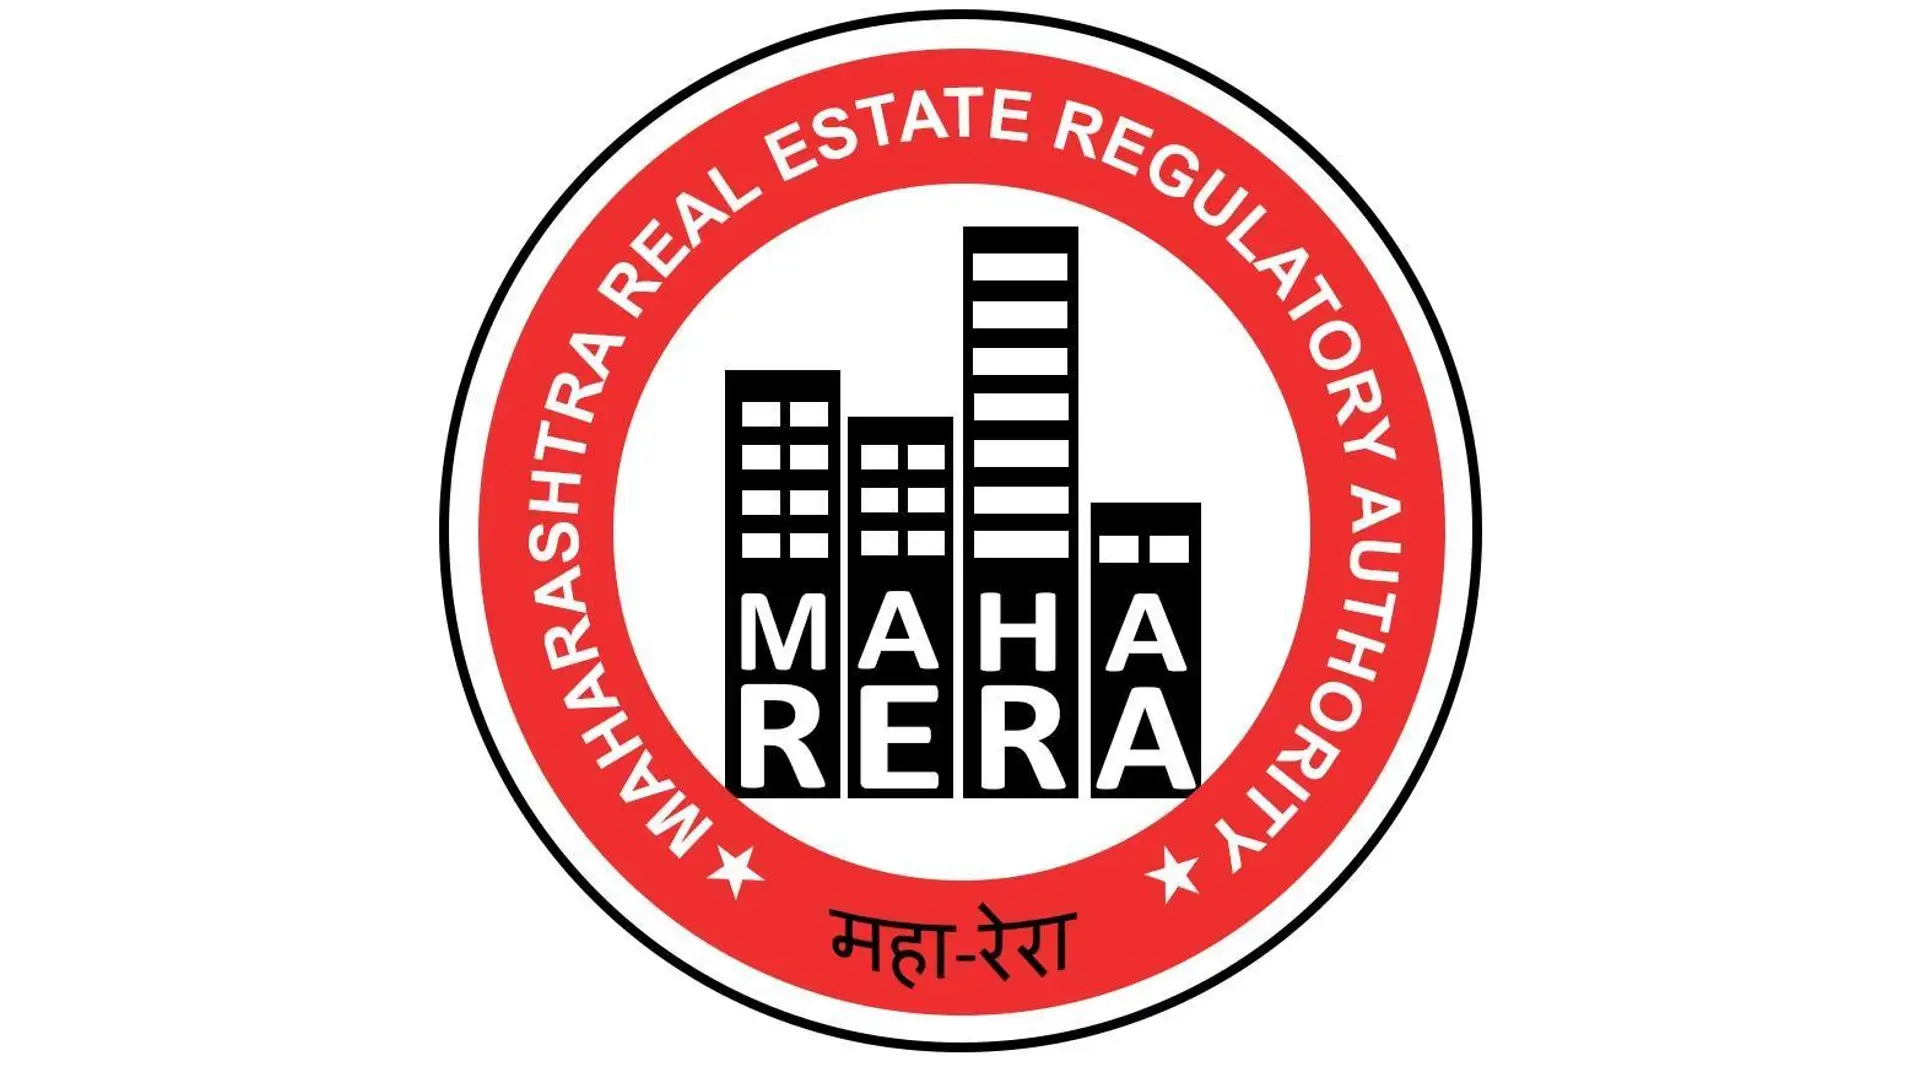 MahaRERA Real Estate Agent Certification Program - SIILC